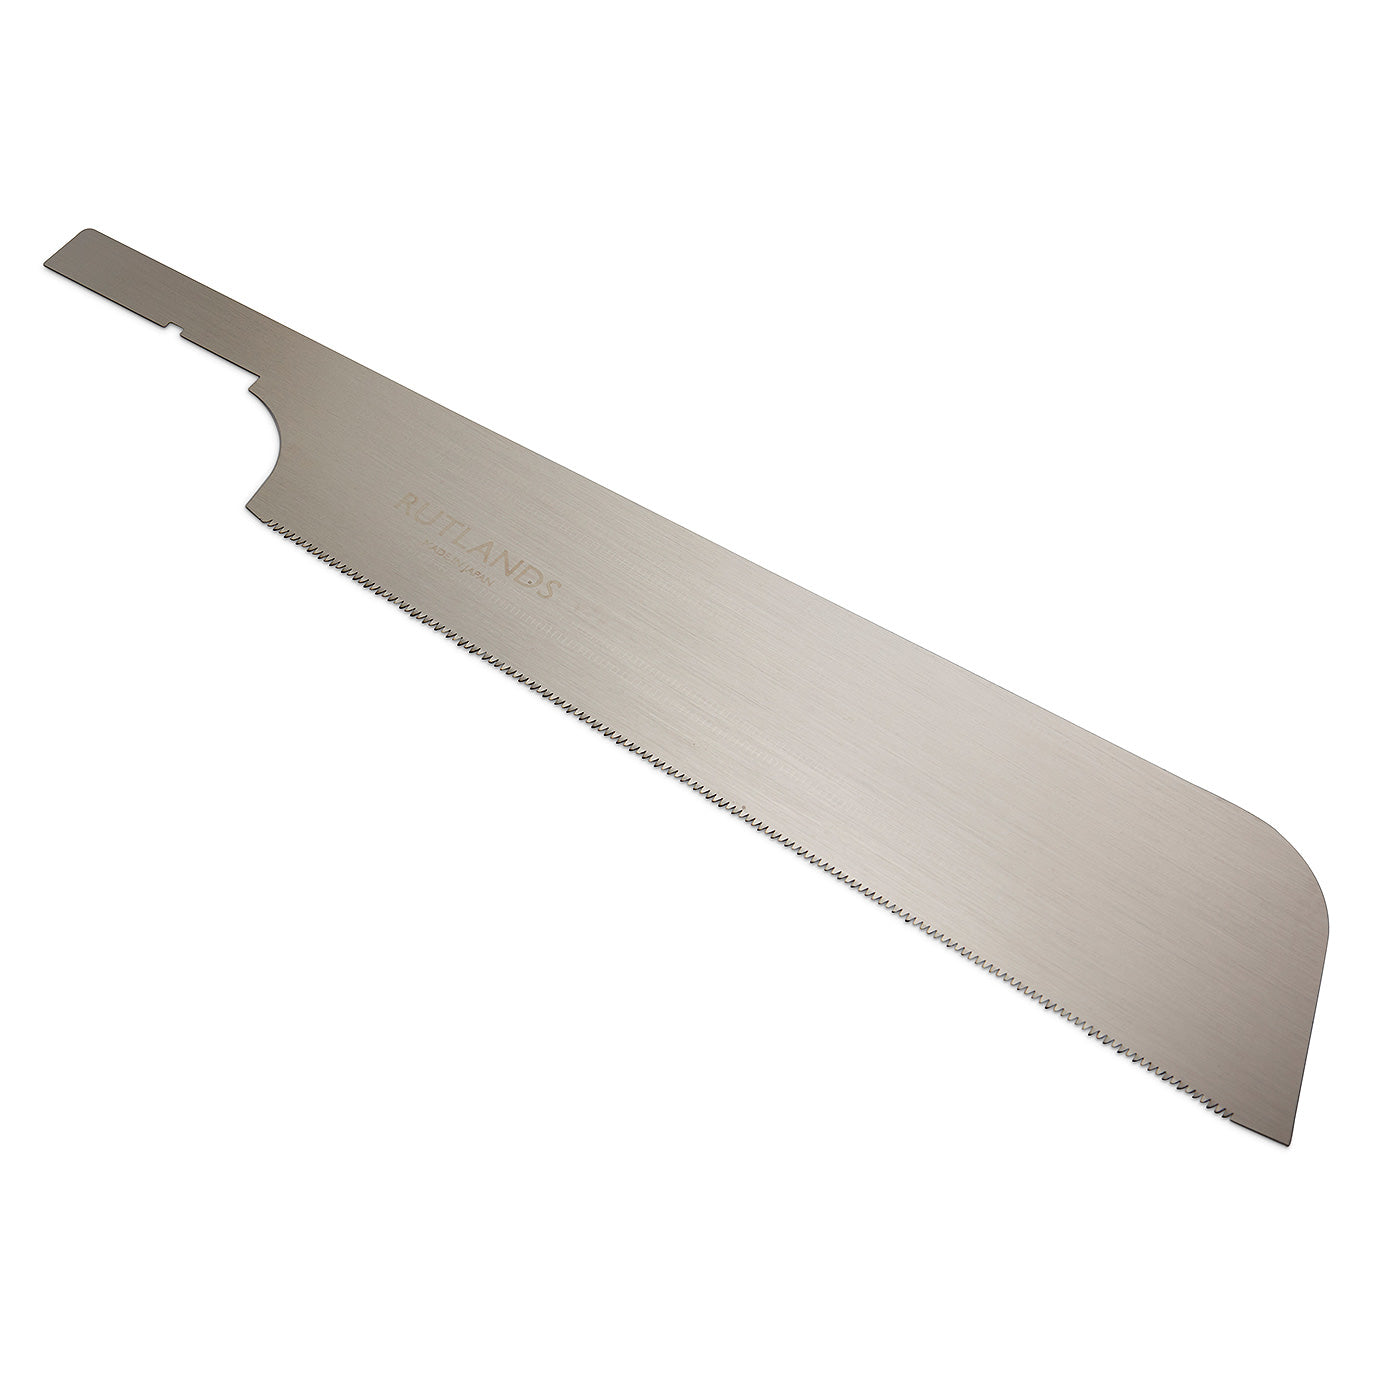 Blade for Dozuki Universal Saw - 240mm